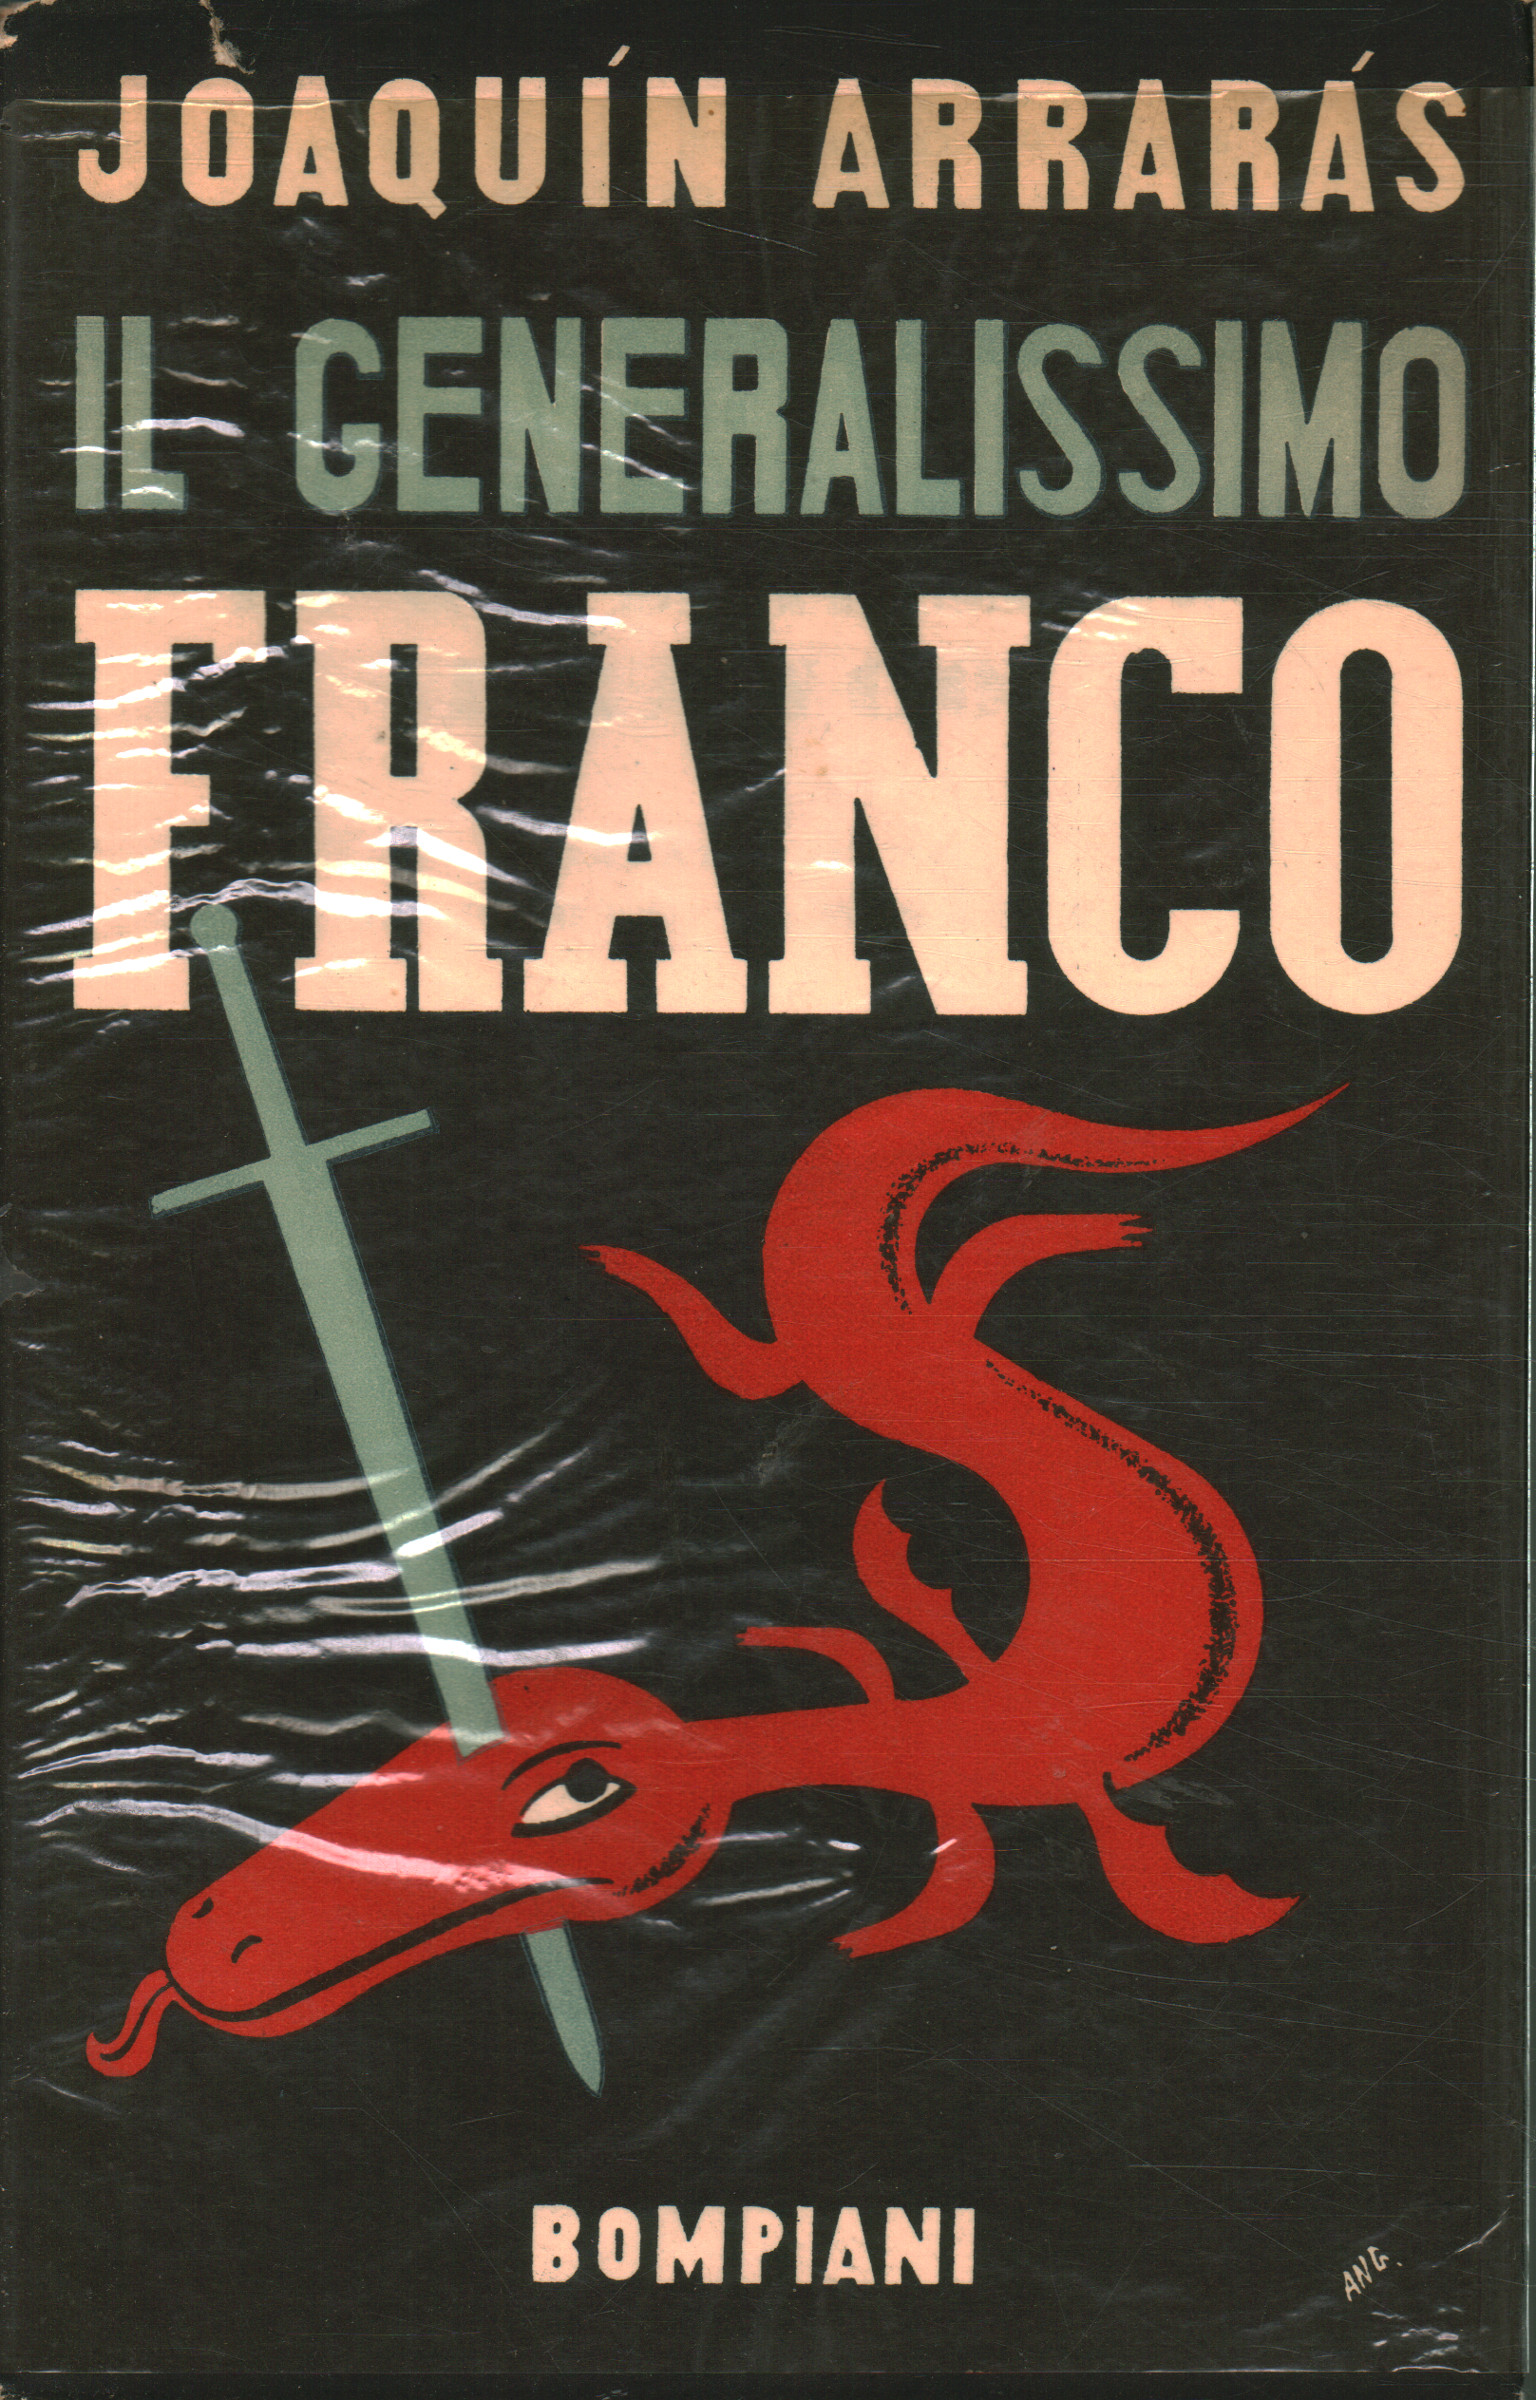 Der Generalissimus Franco